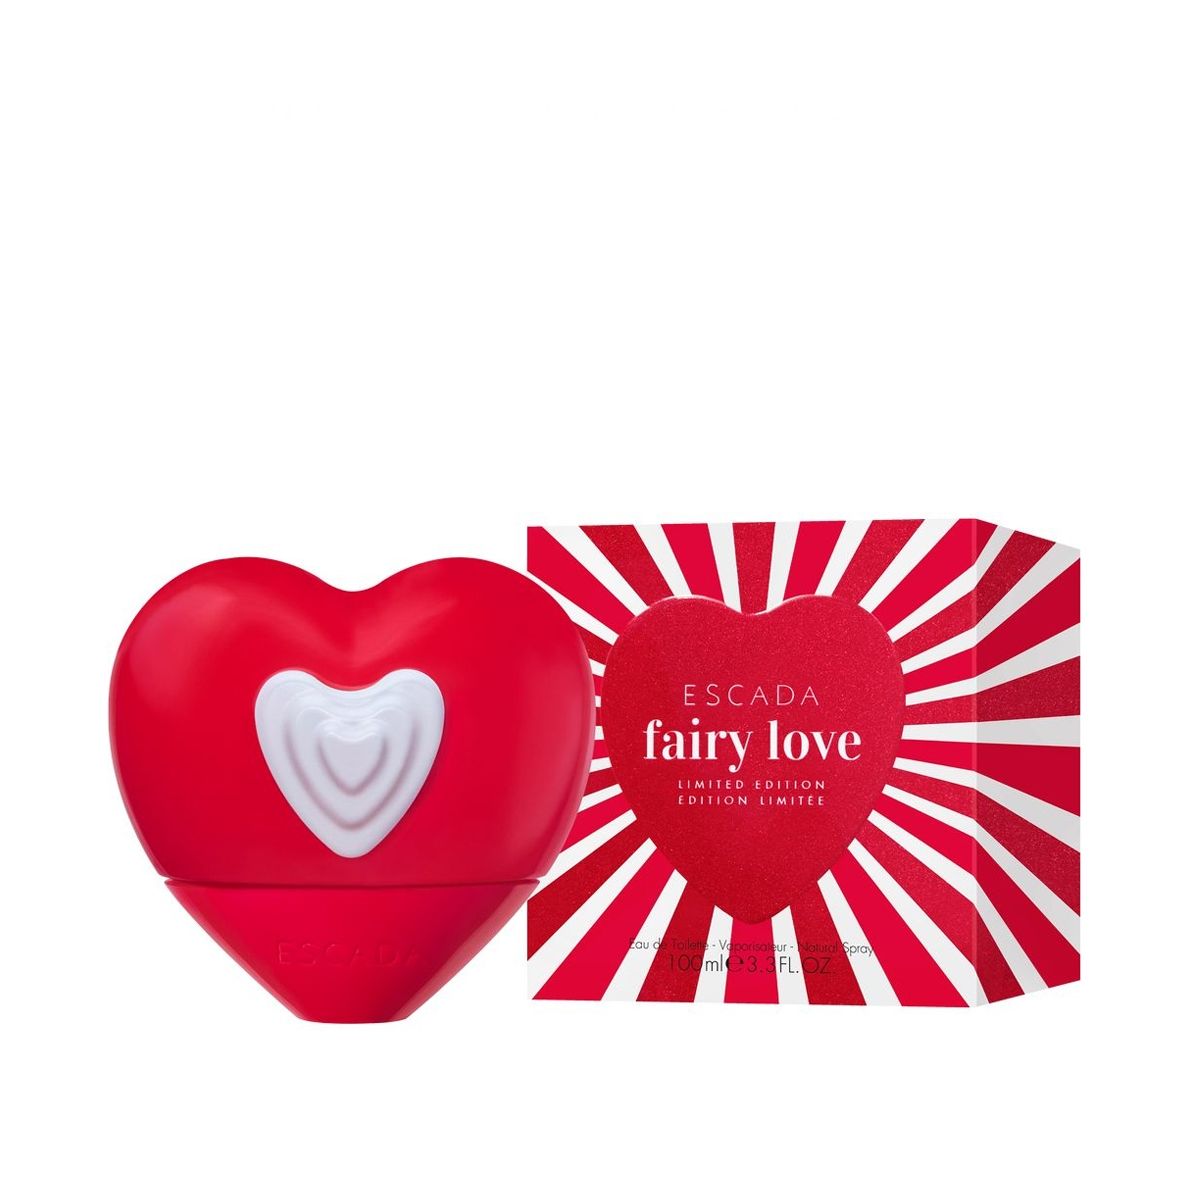 Escada Fairy Love Limited Edition For Women Eau De Toilette 100Ml Tester